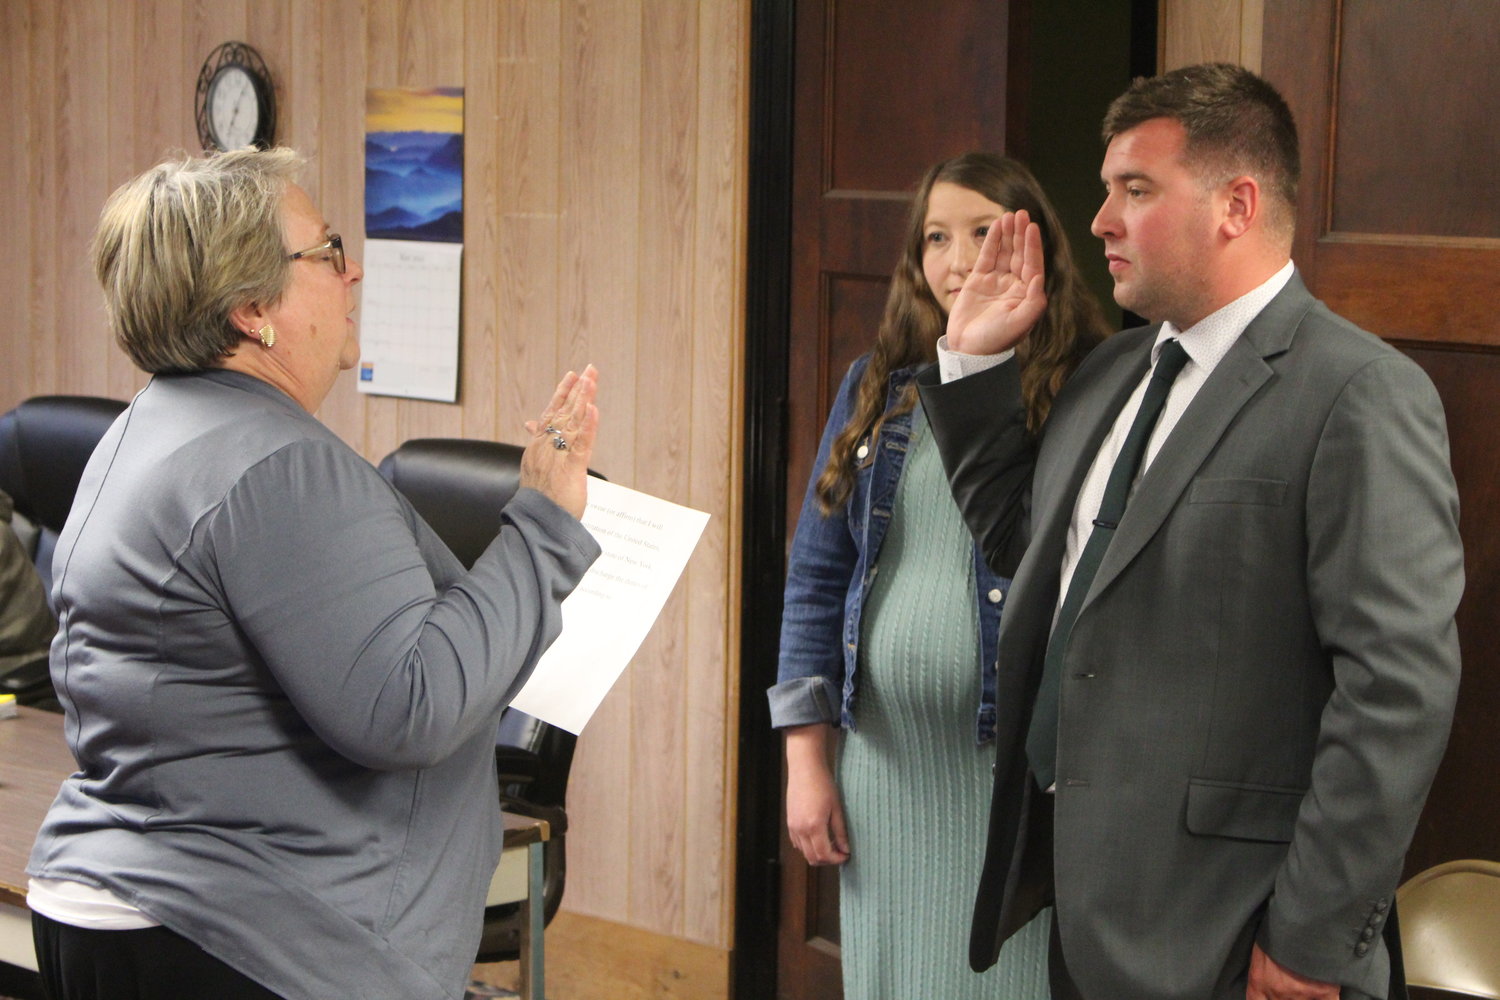 Police Detective Andrew Cross is sworn in by Village of Liberty Mayor Joan Stoddard alongside his wife Kaitlyn.